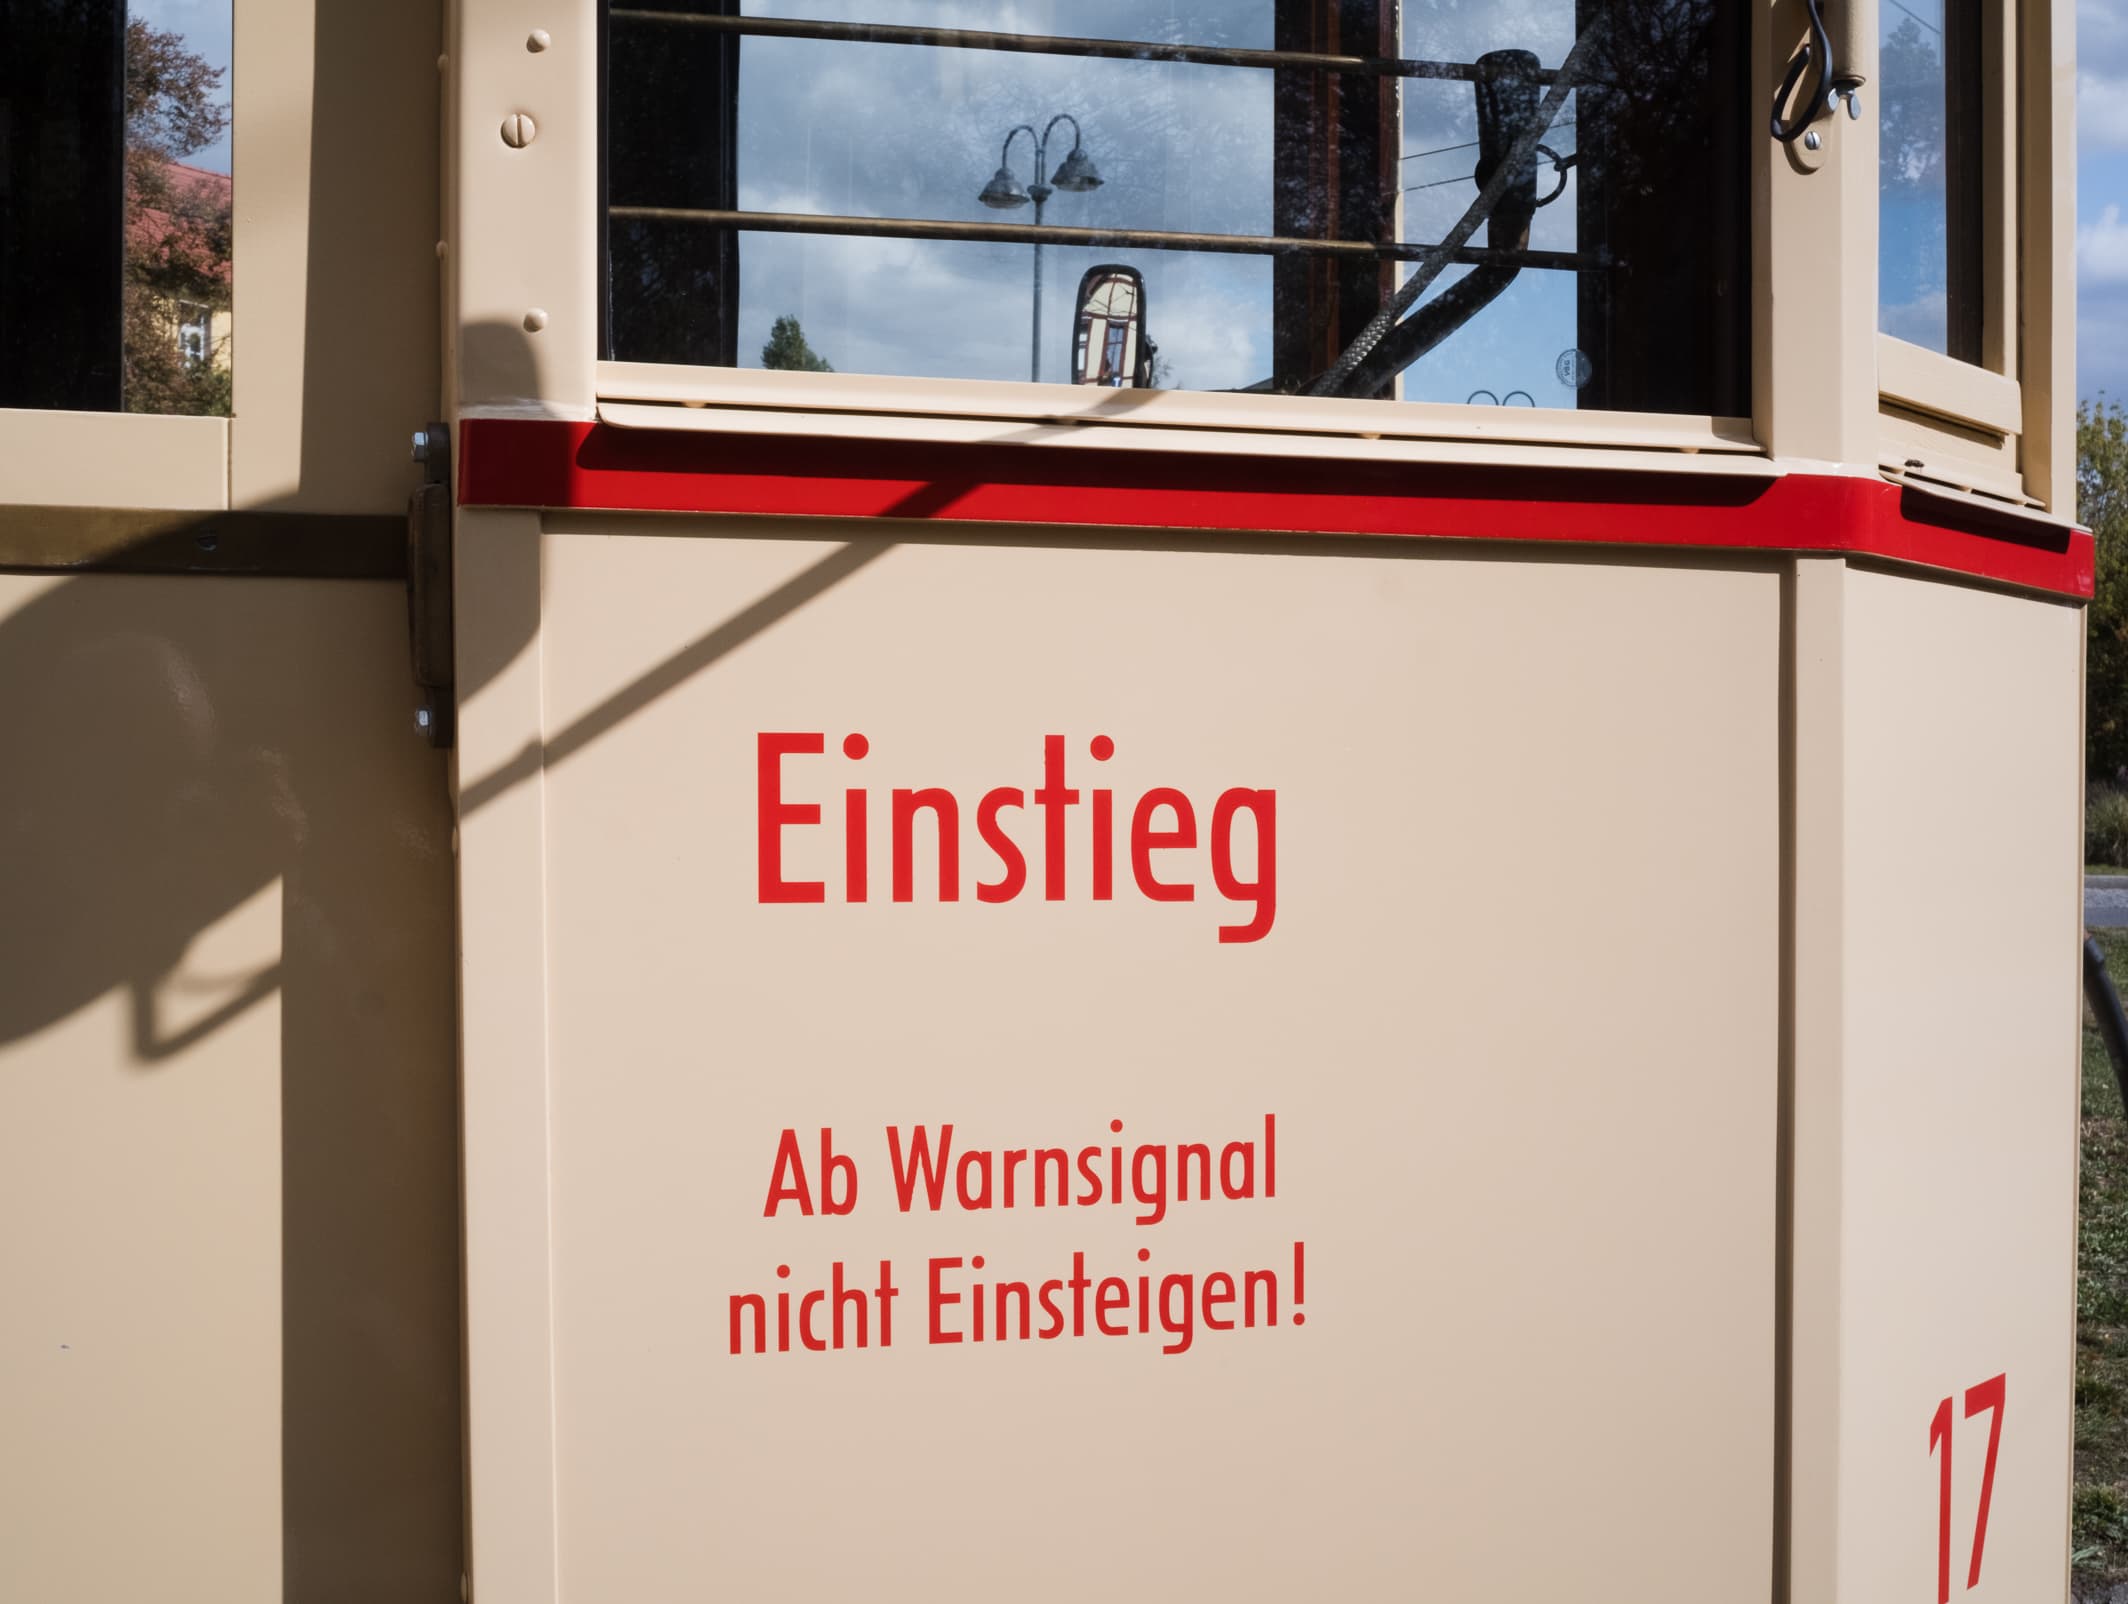 Industriekultur – Naumburger Straßenbahn